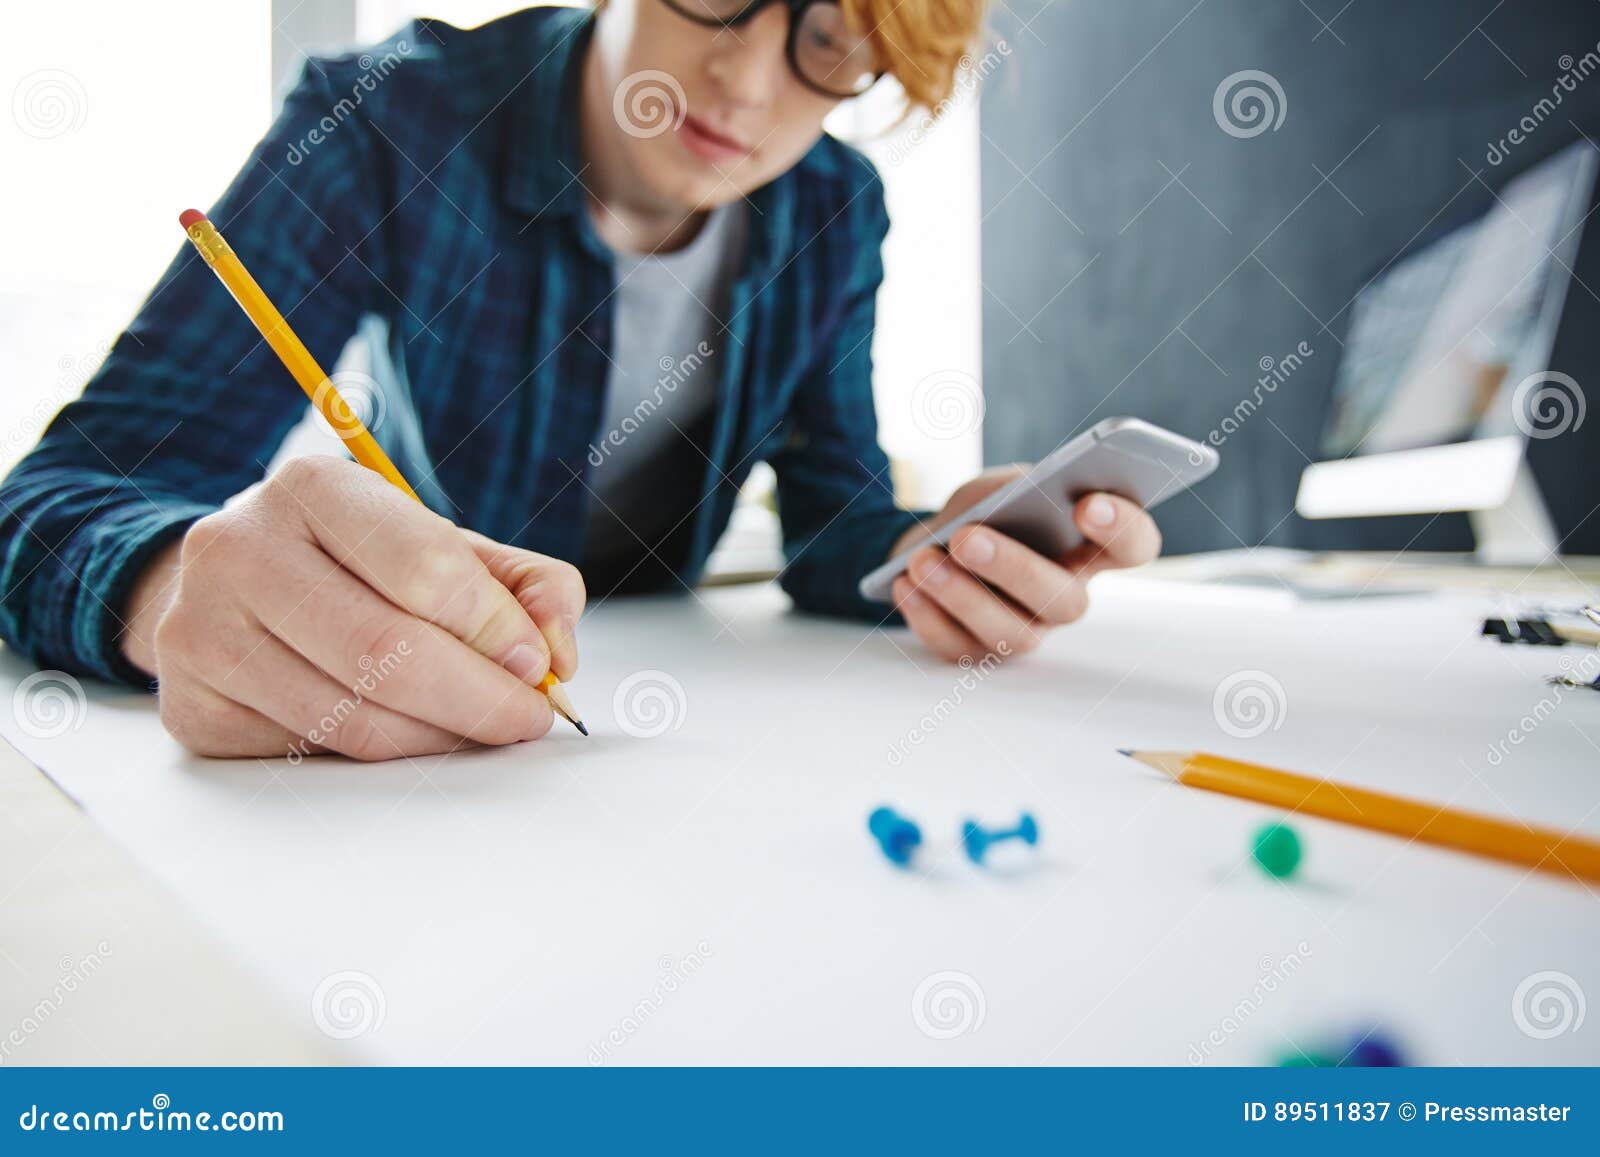 Creative Designer Drawing At Desk Stock Image Image Of Engineer